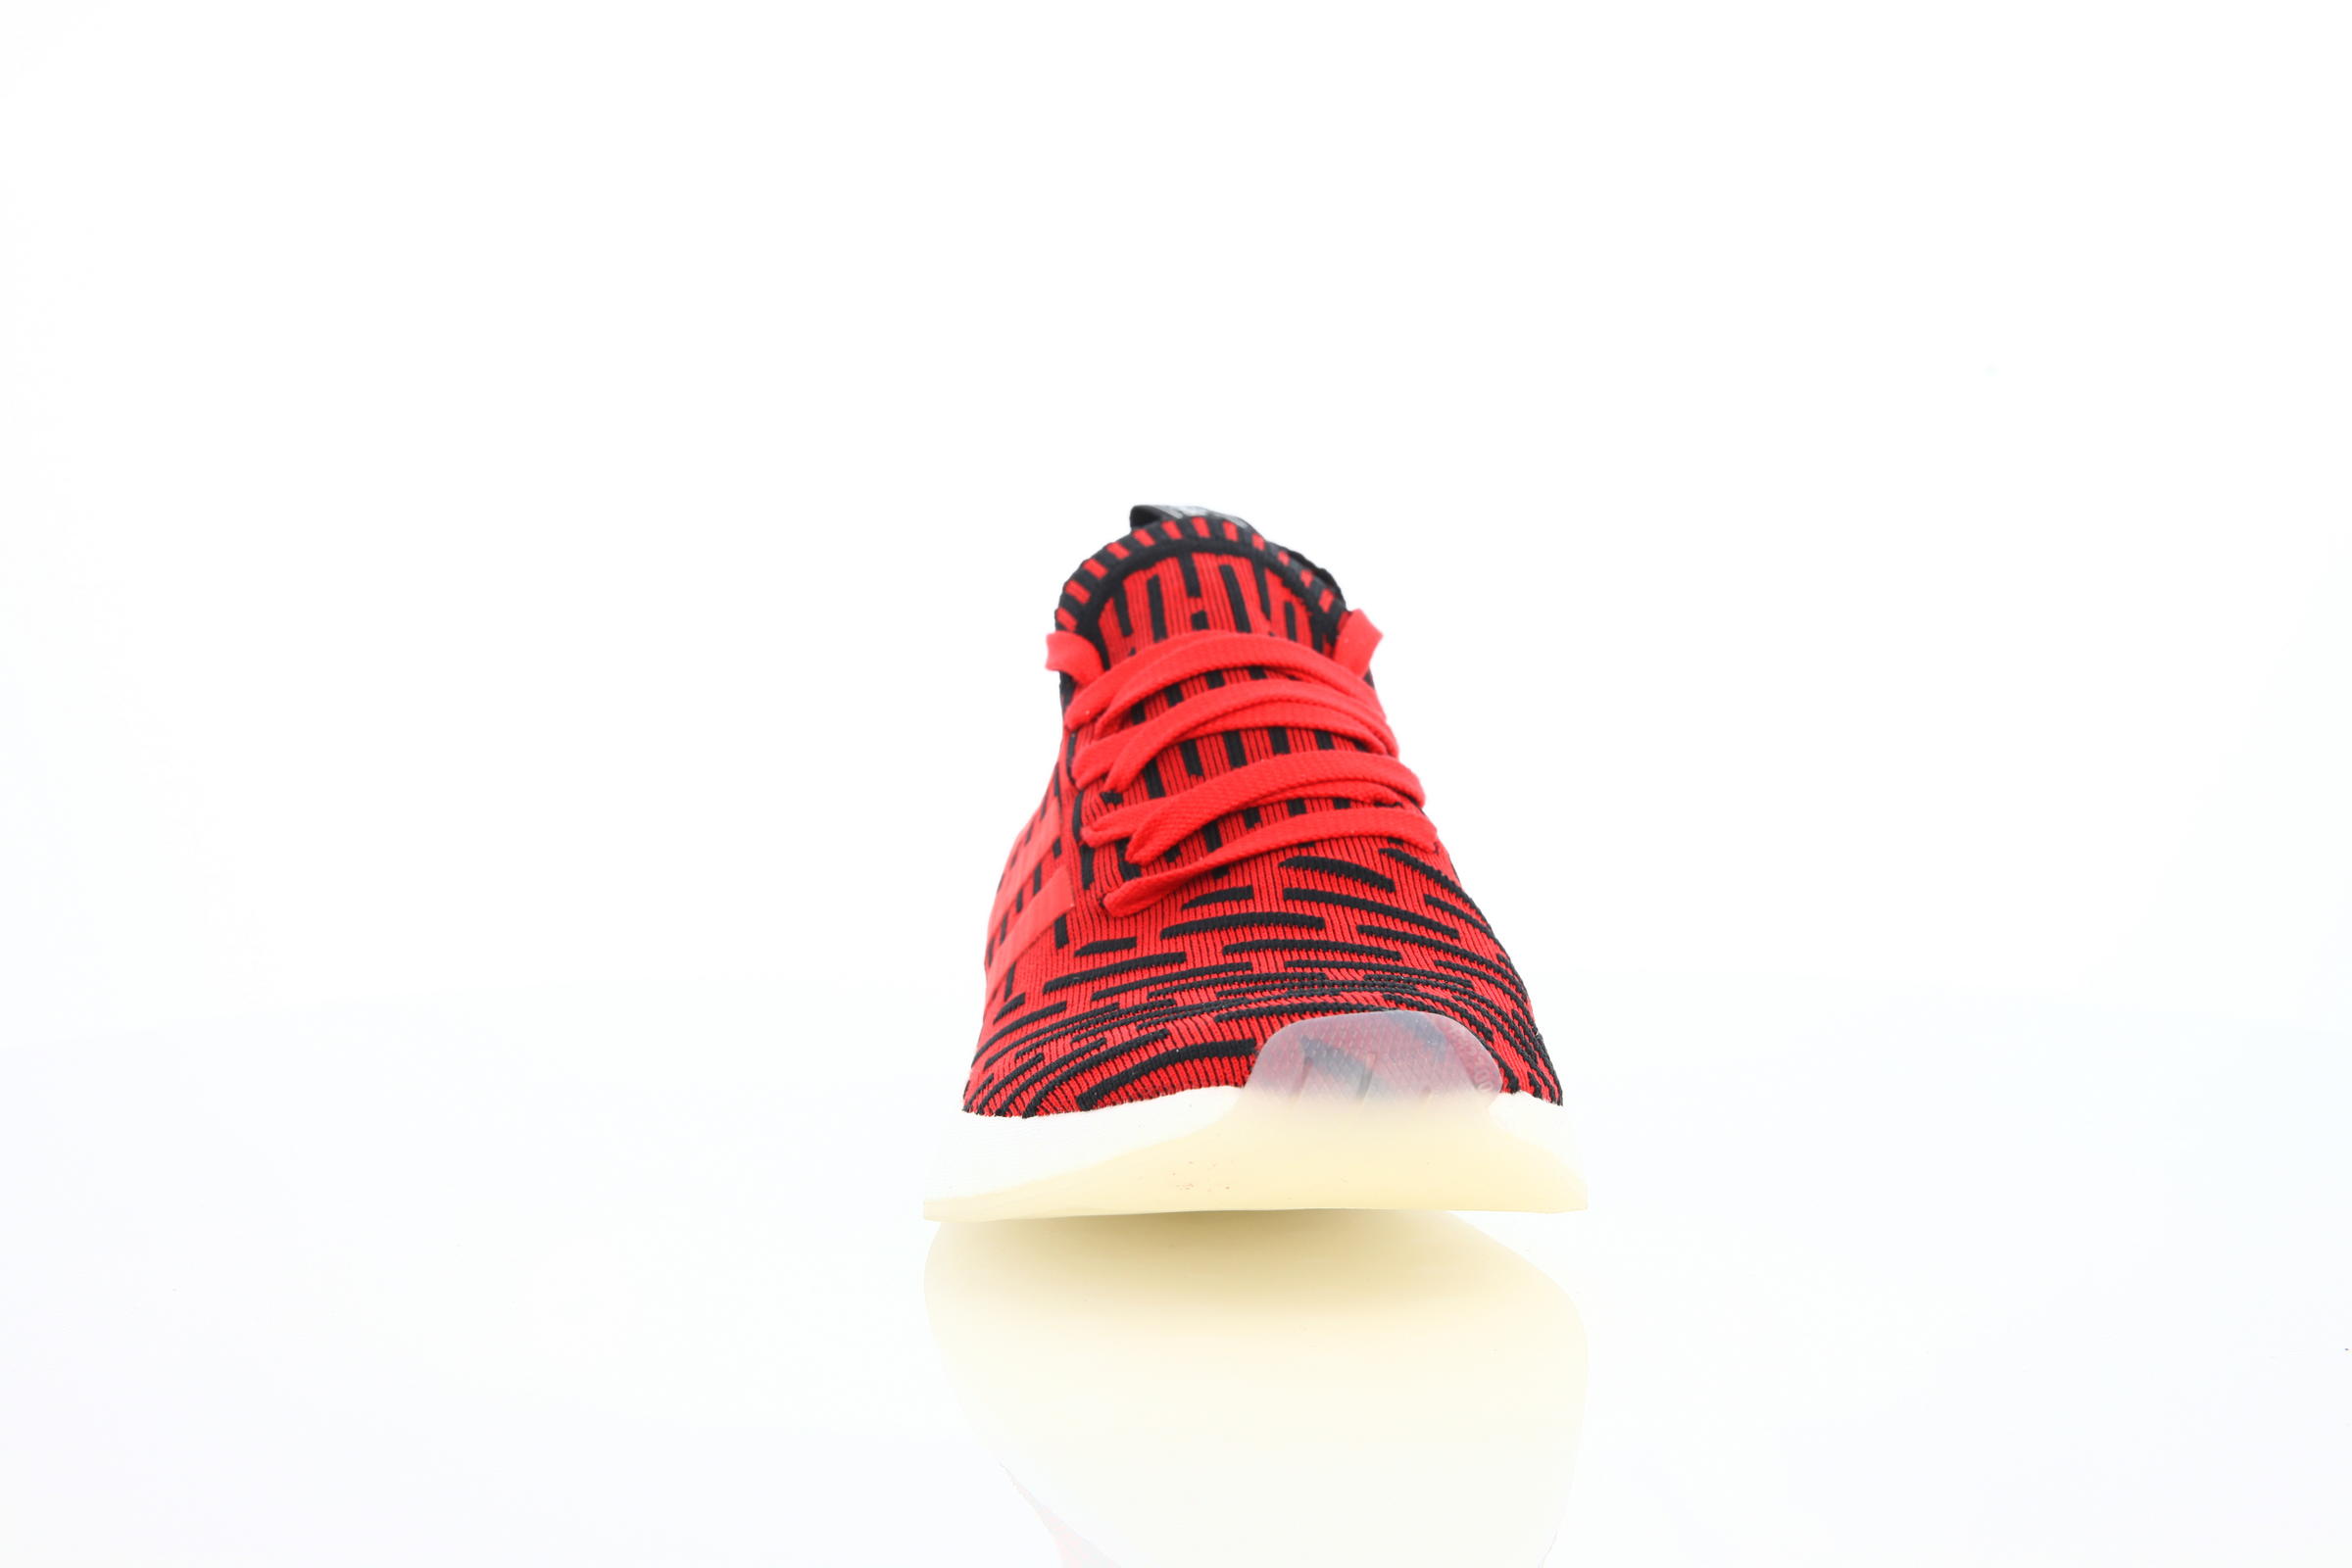 adidas Originals Nmd R2 Boost Runner Primeknit "Core Red"